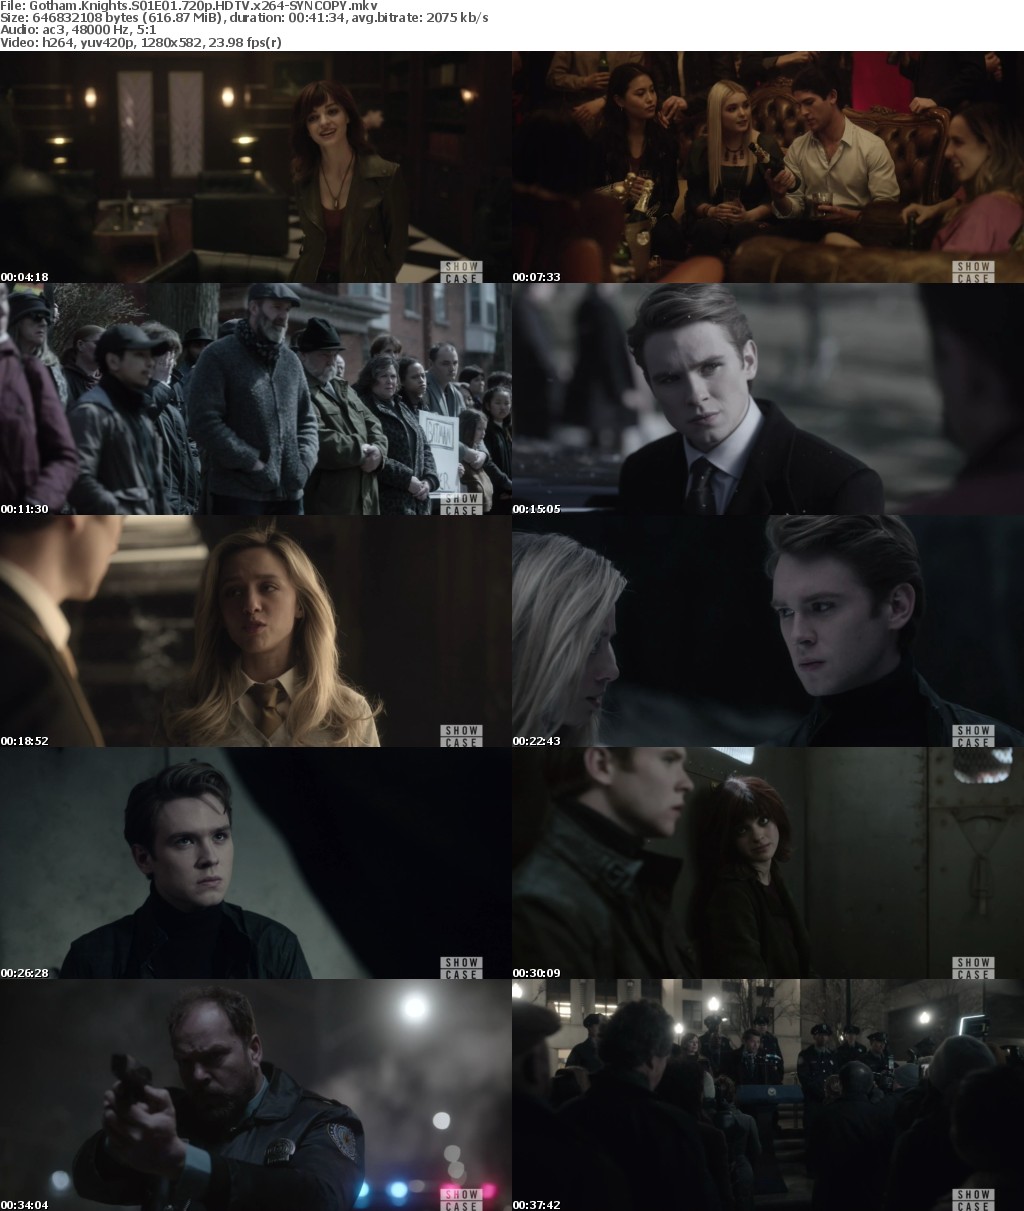 Gotham Knights S01E01 720p HDTV x264-SYNCOPY